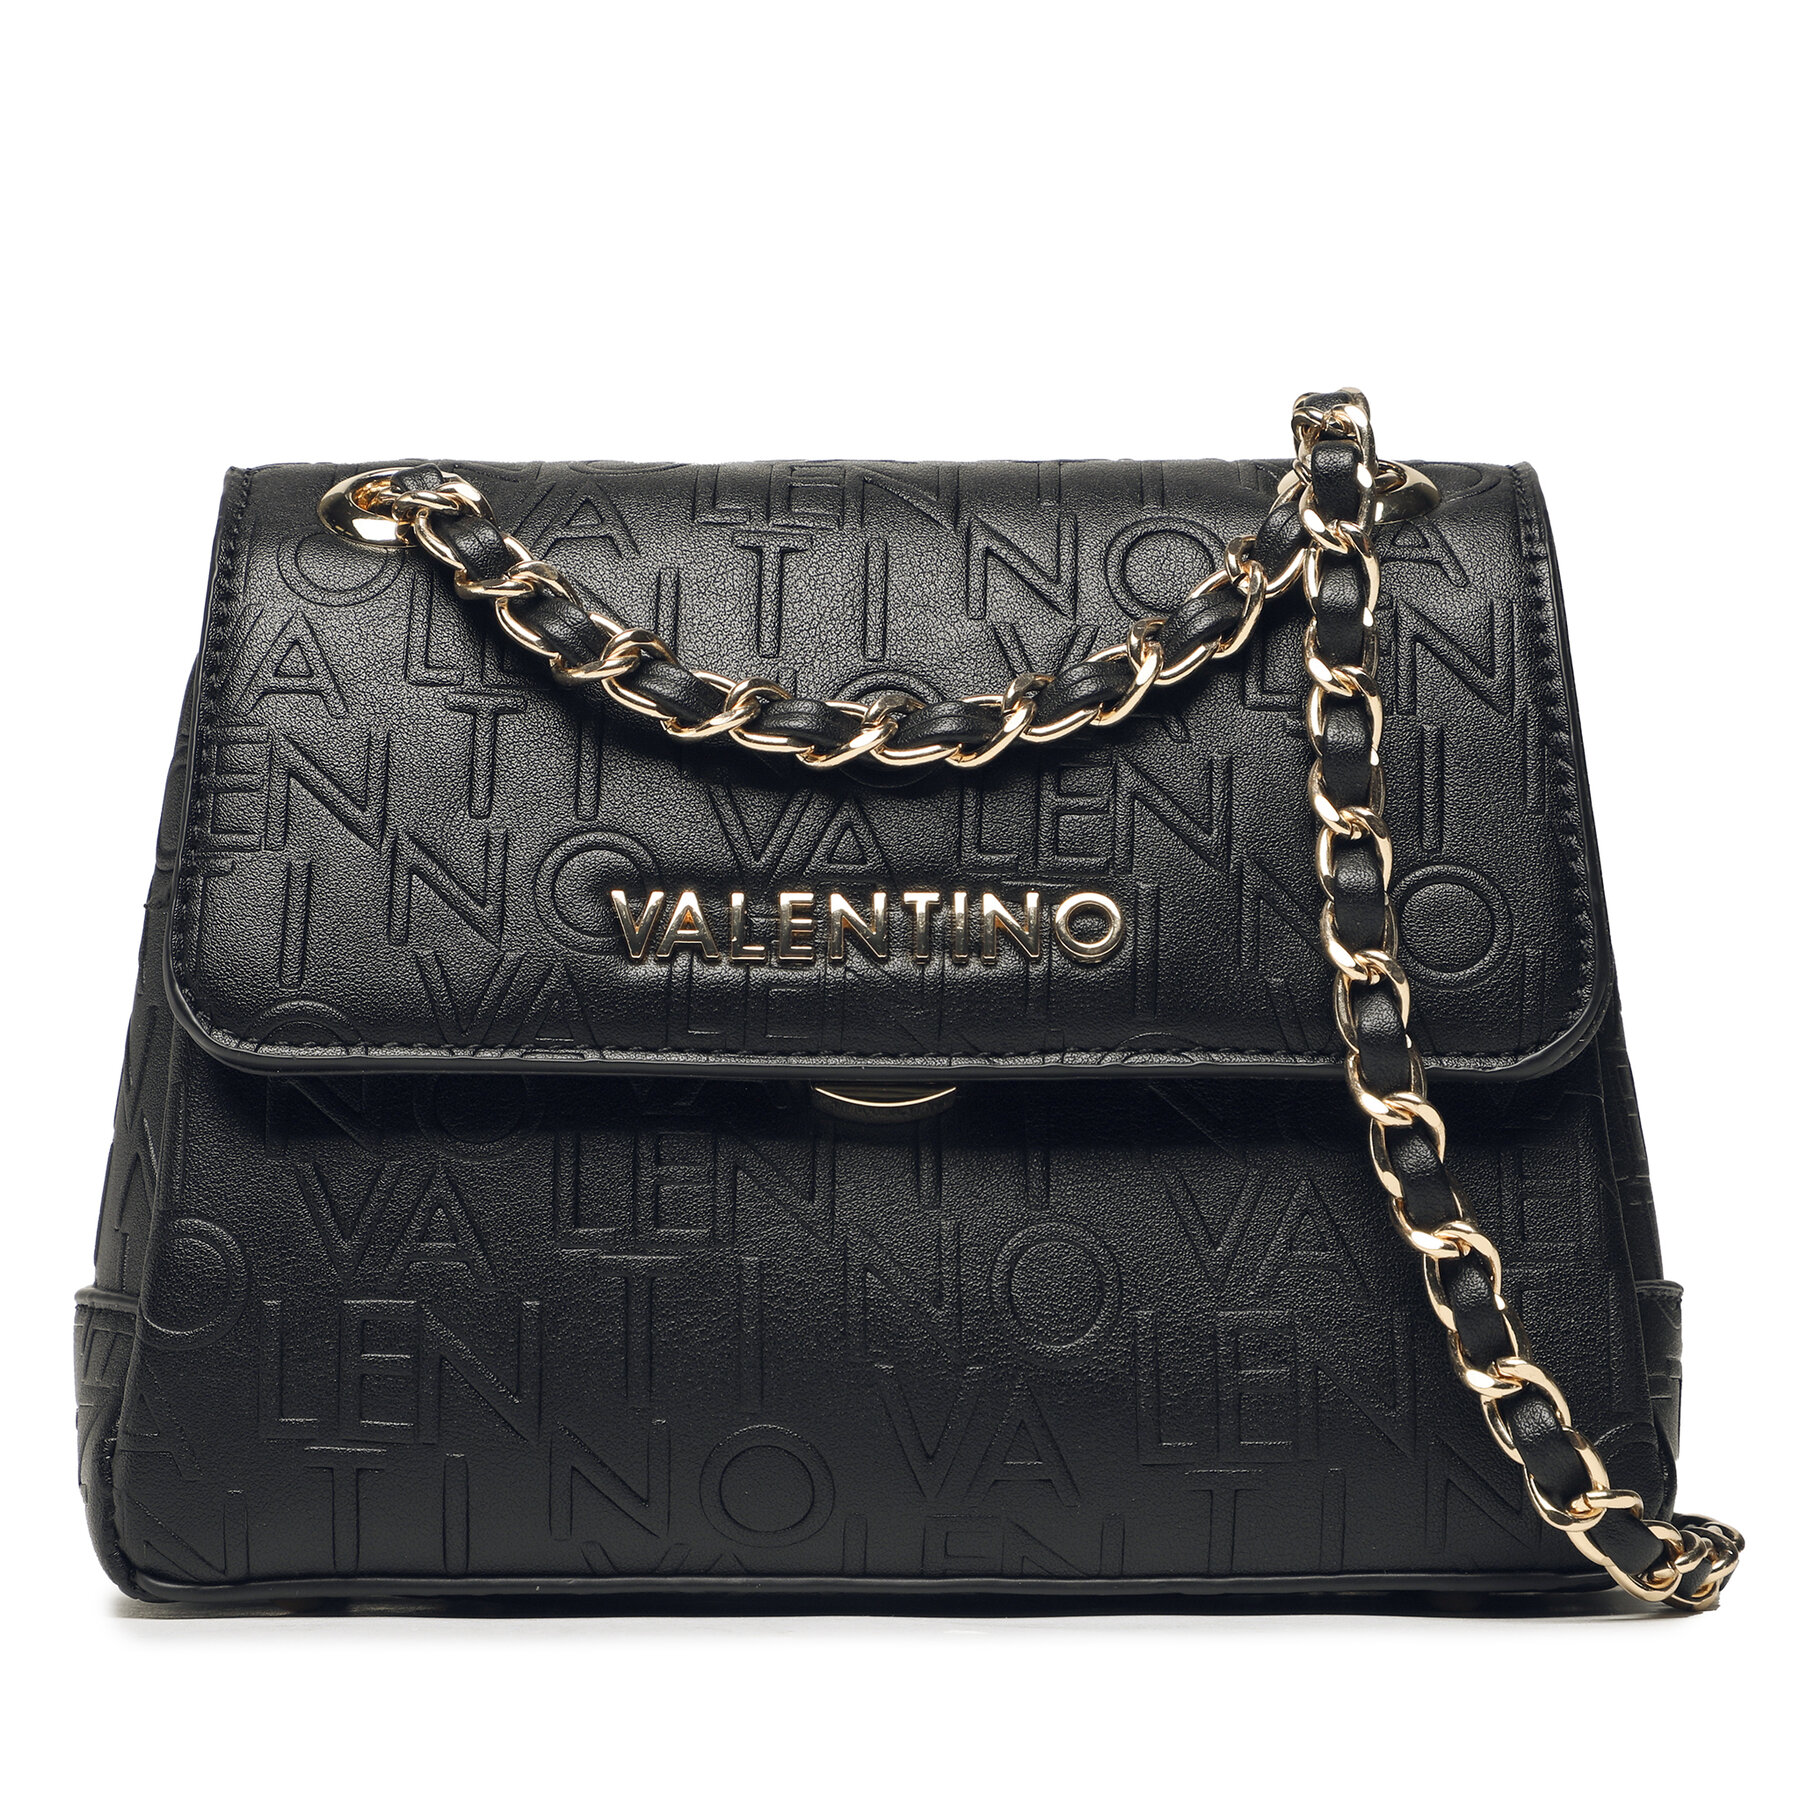 Handtasche Valentino Relax VBS6V003 Nero von Valentino